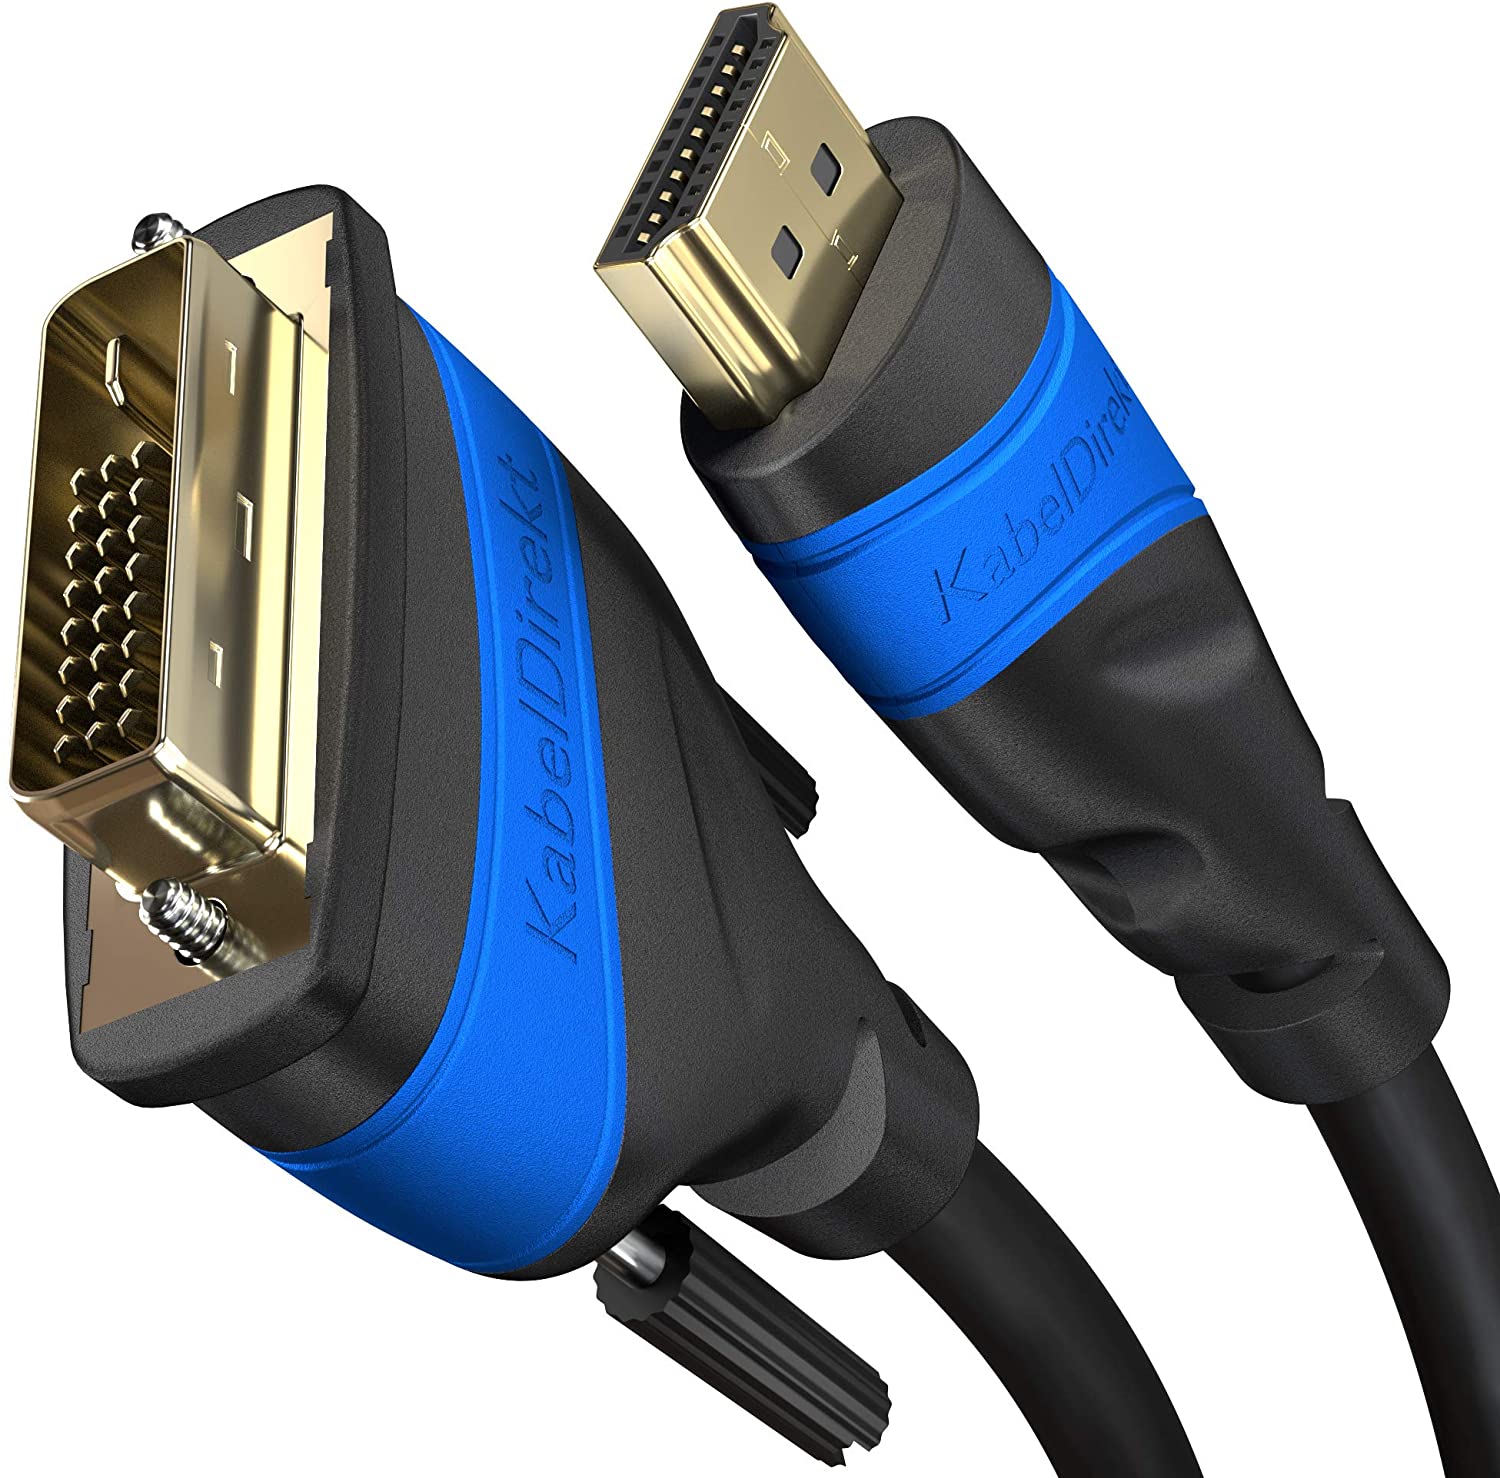 Cable Hdmi 2.0 4k Ultra Hd Lancom Alta Velocidad 3D 2 Metros 2160p PVC